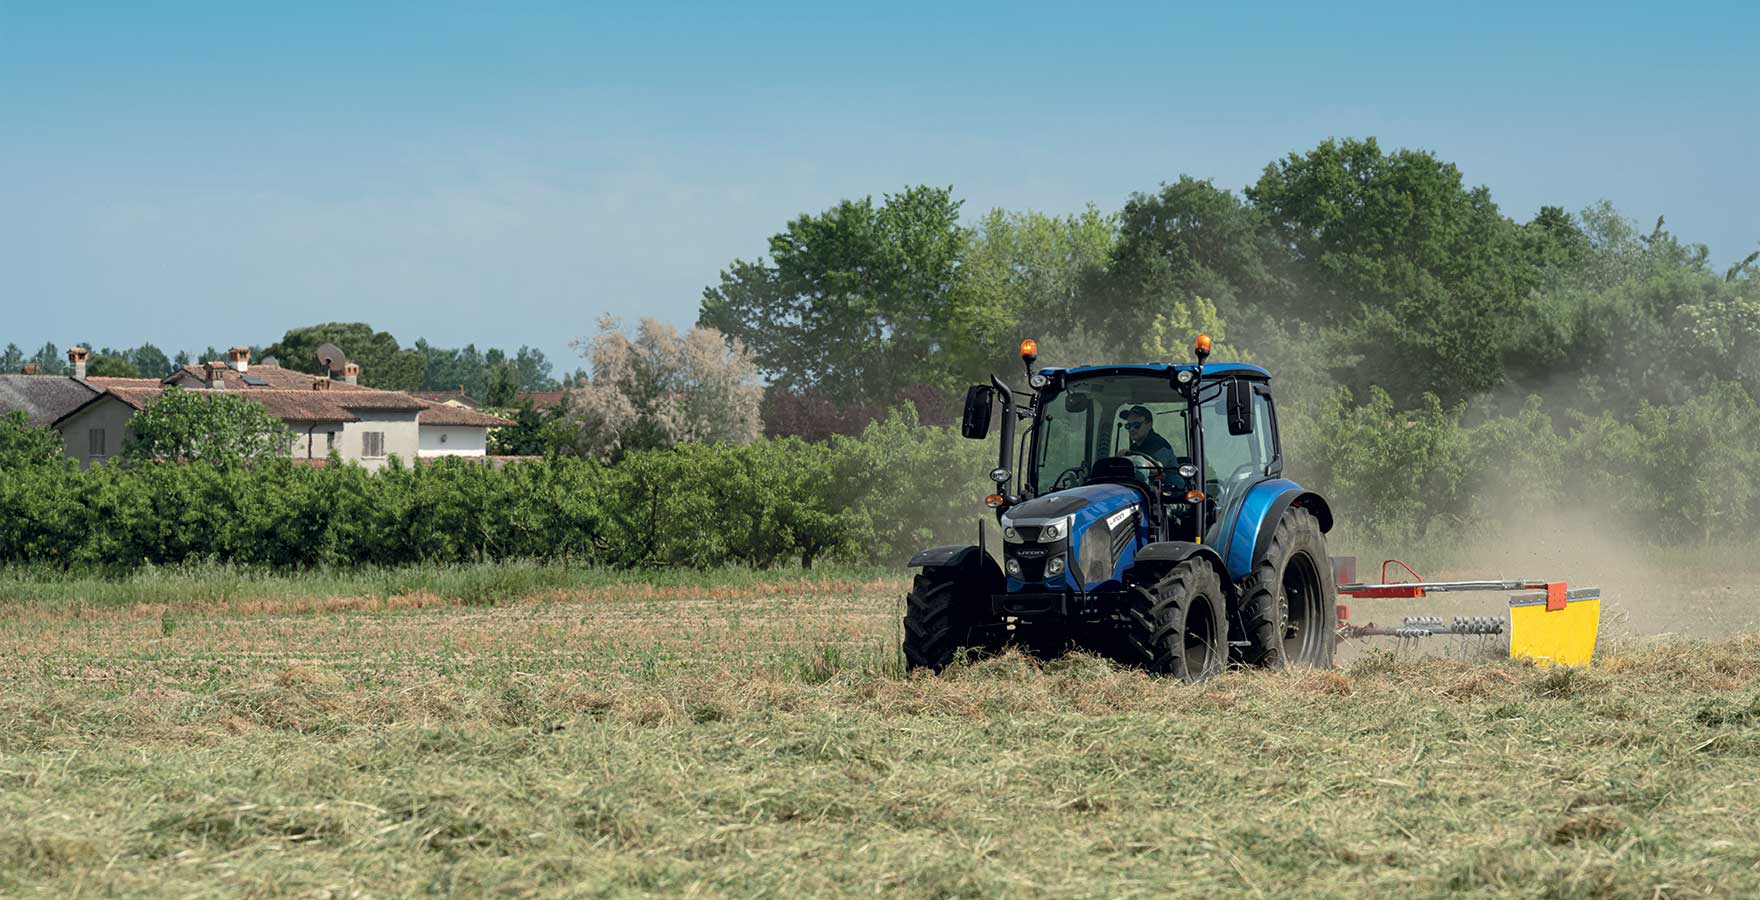 landini serie 5 stageV 5-085 tractores agricultura nuevo modelo serie 2 stage V etapa 5